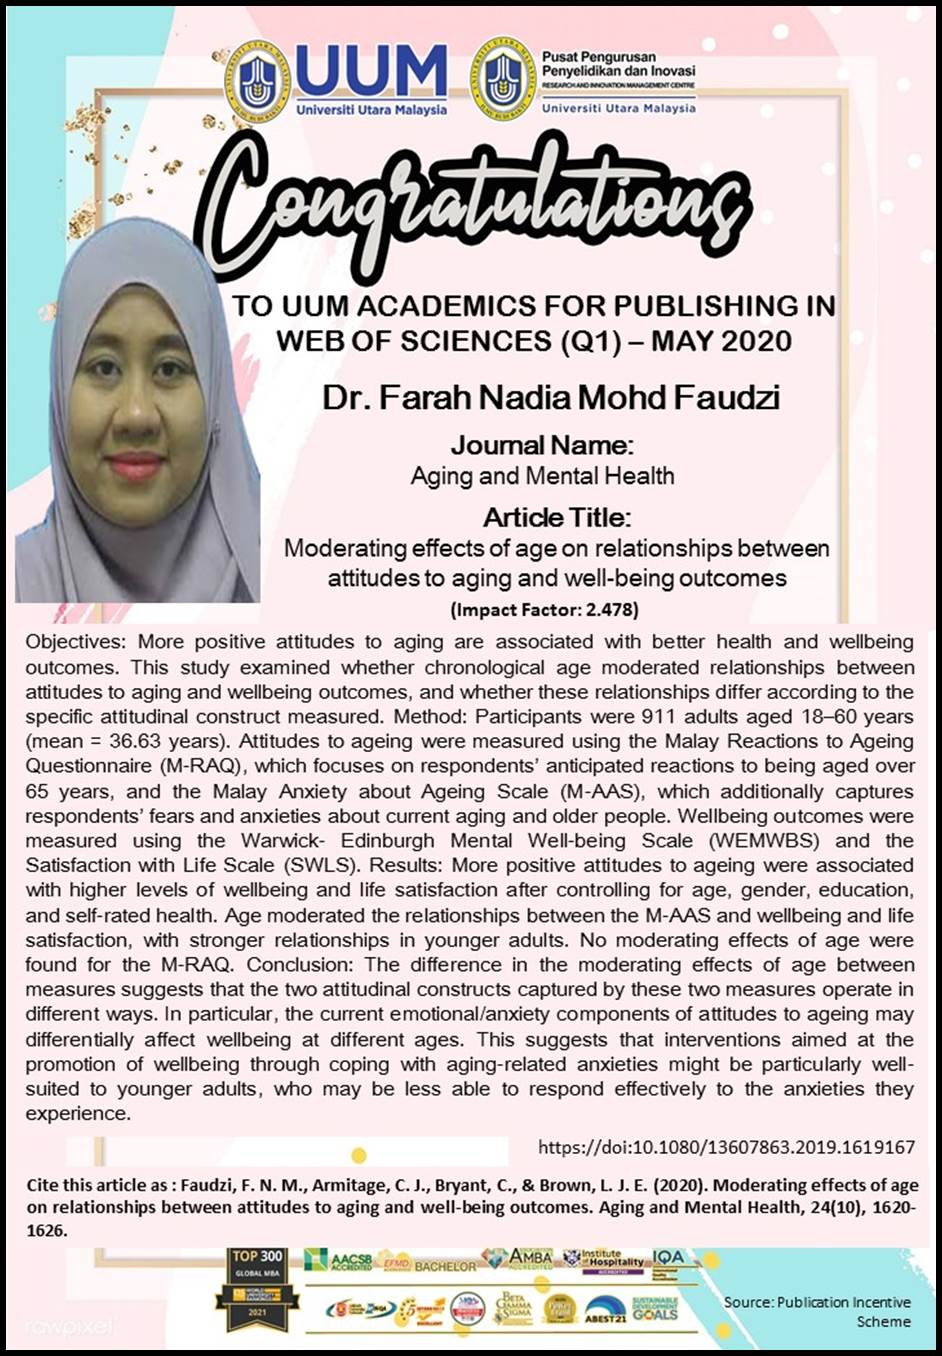 Dr Farah Nadia